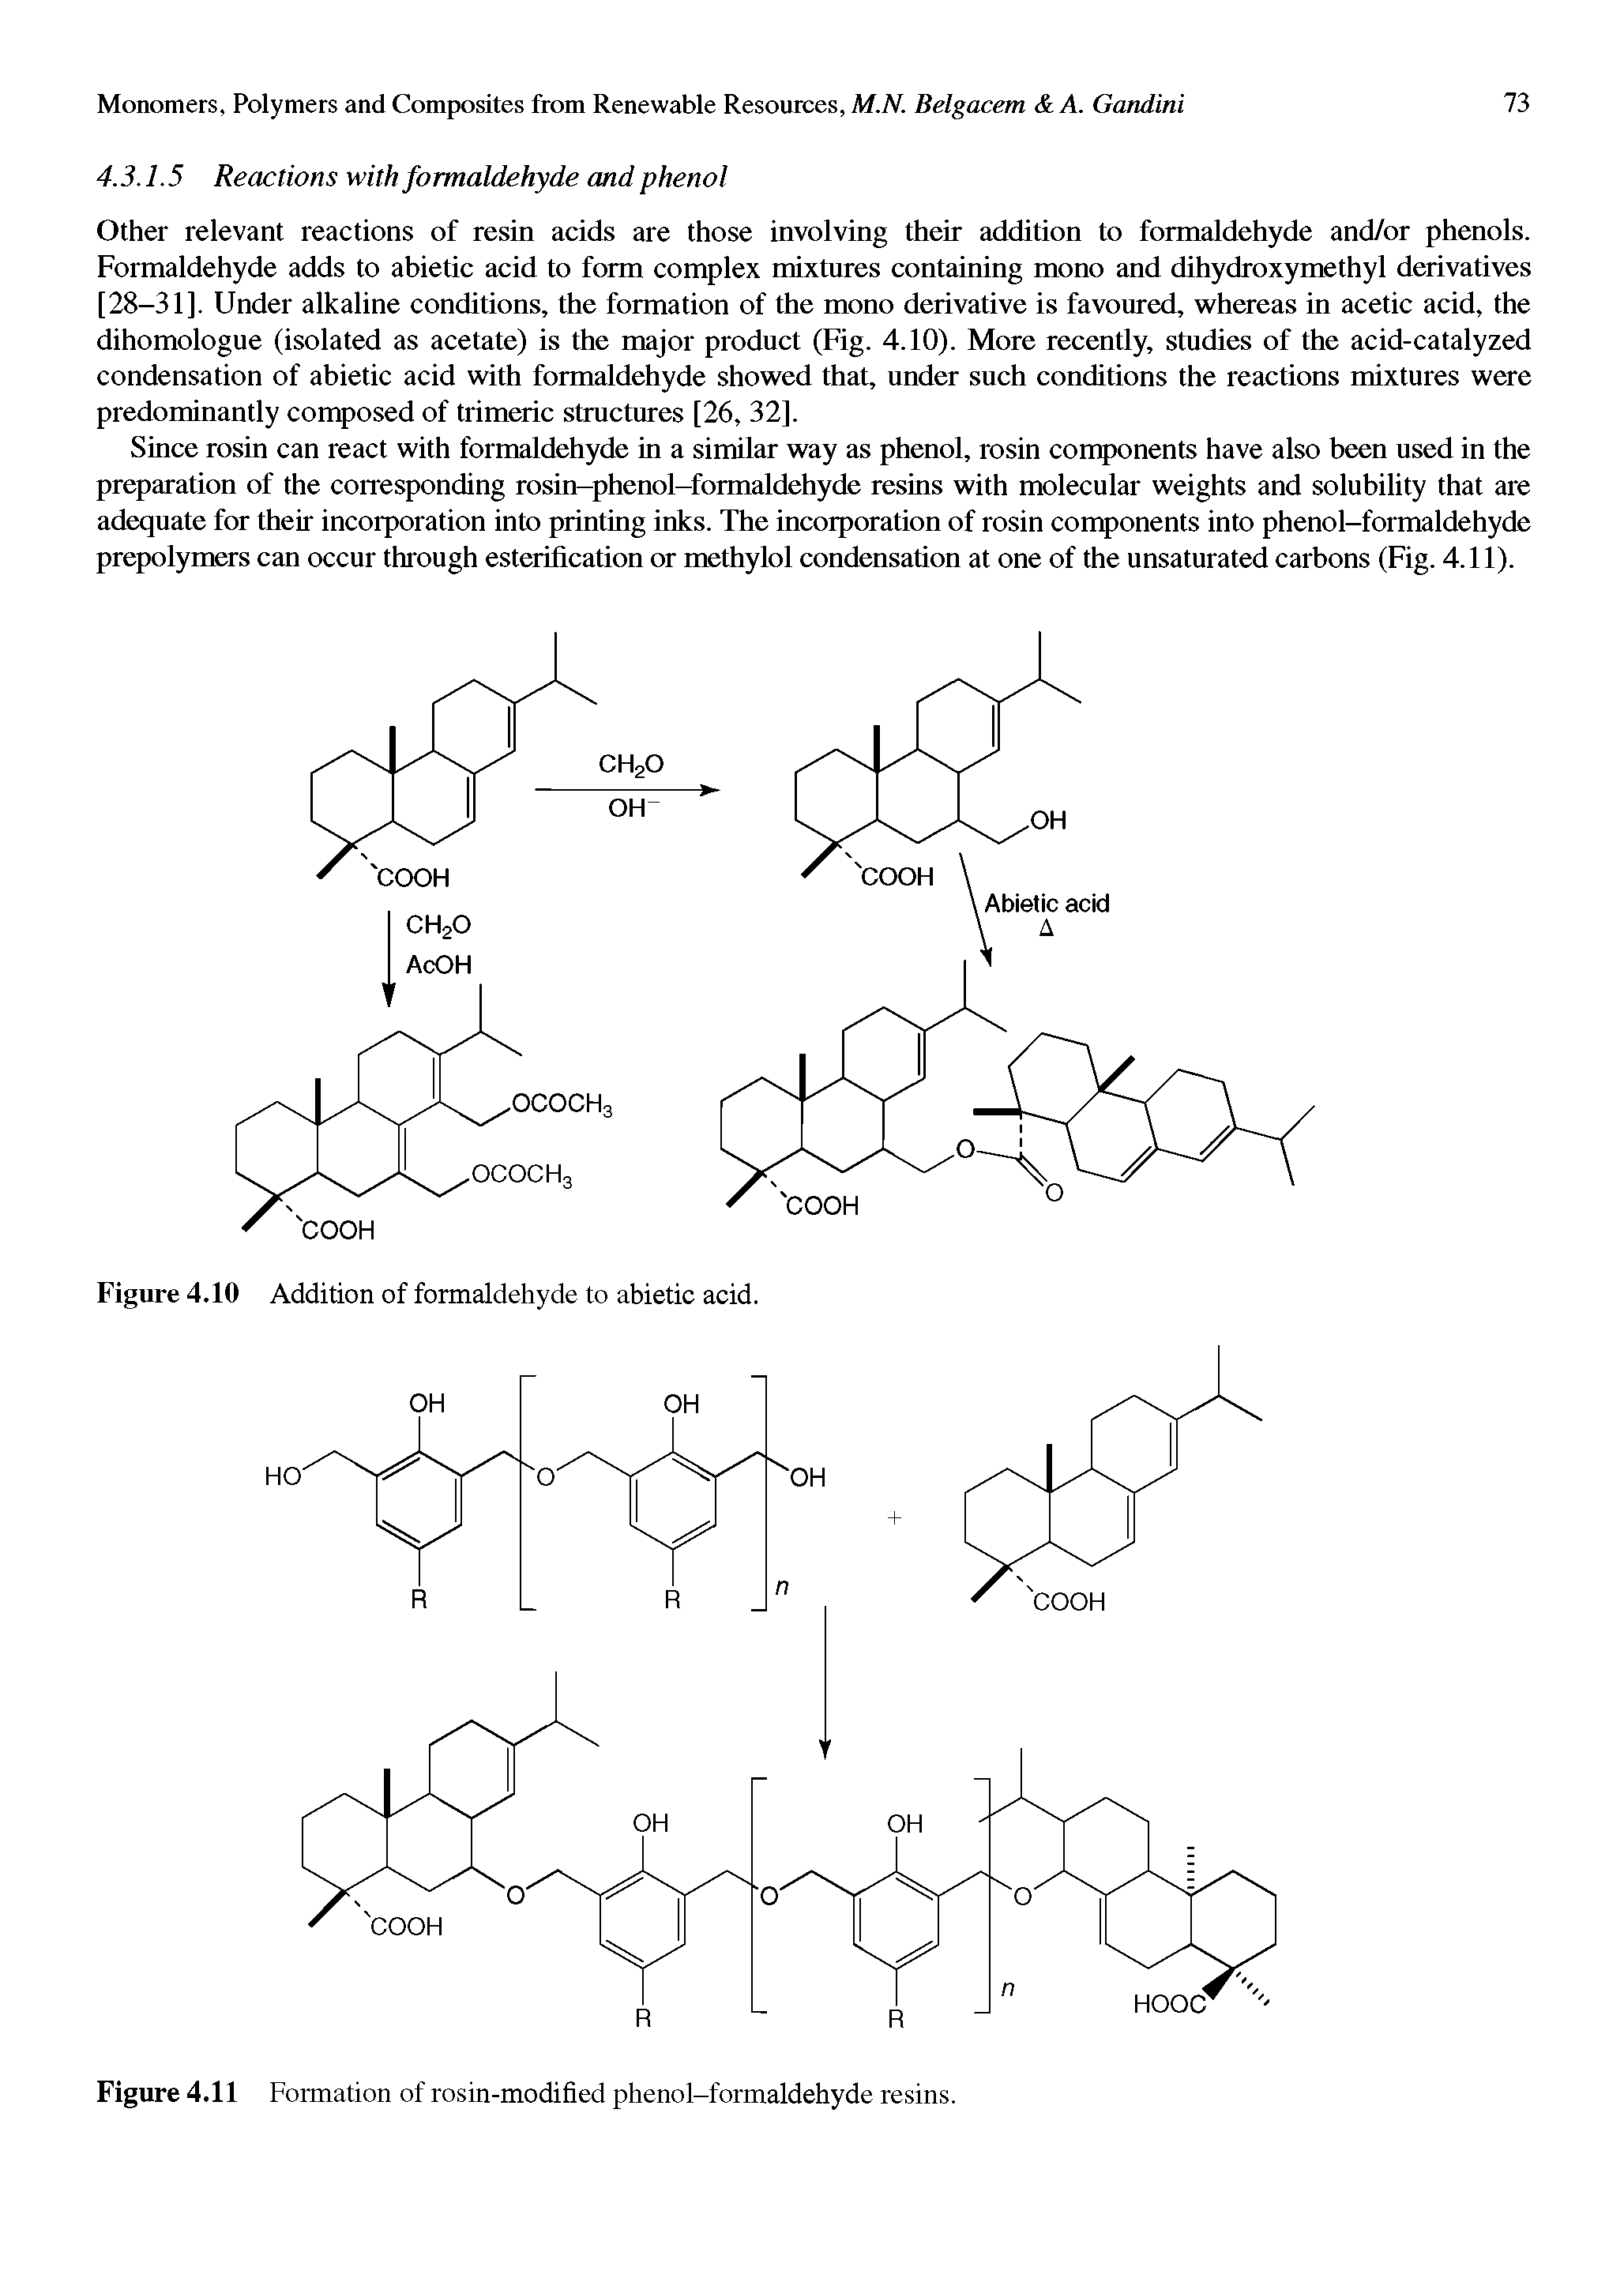 Figure 4.11 Formation of rosin-modified phenol-formaldehyde resins.